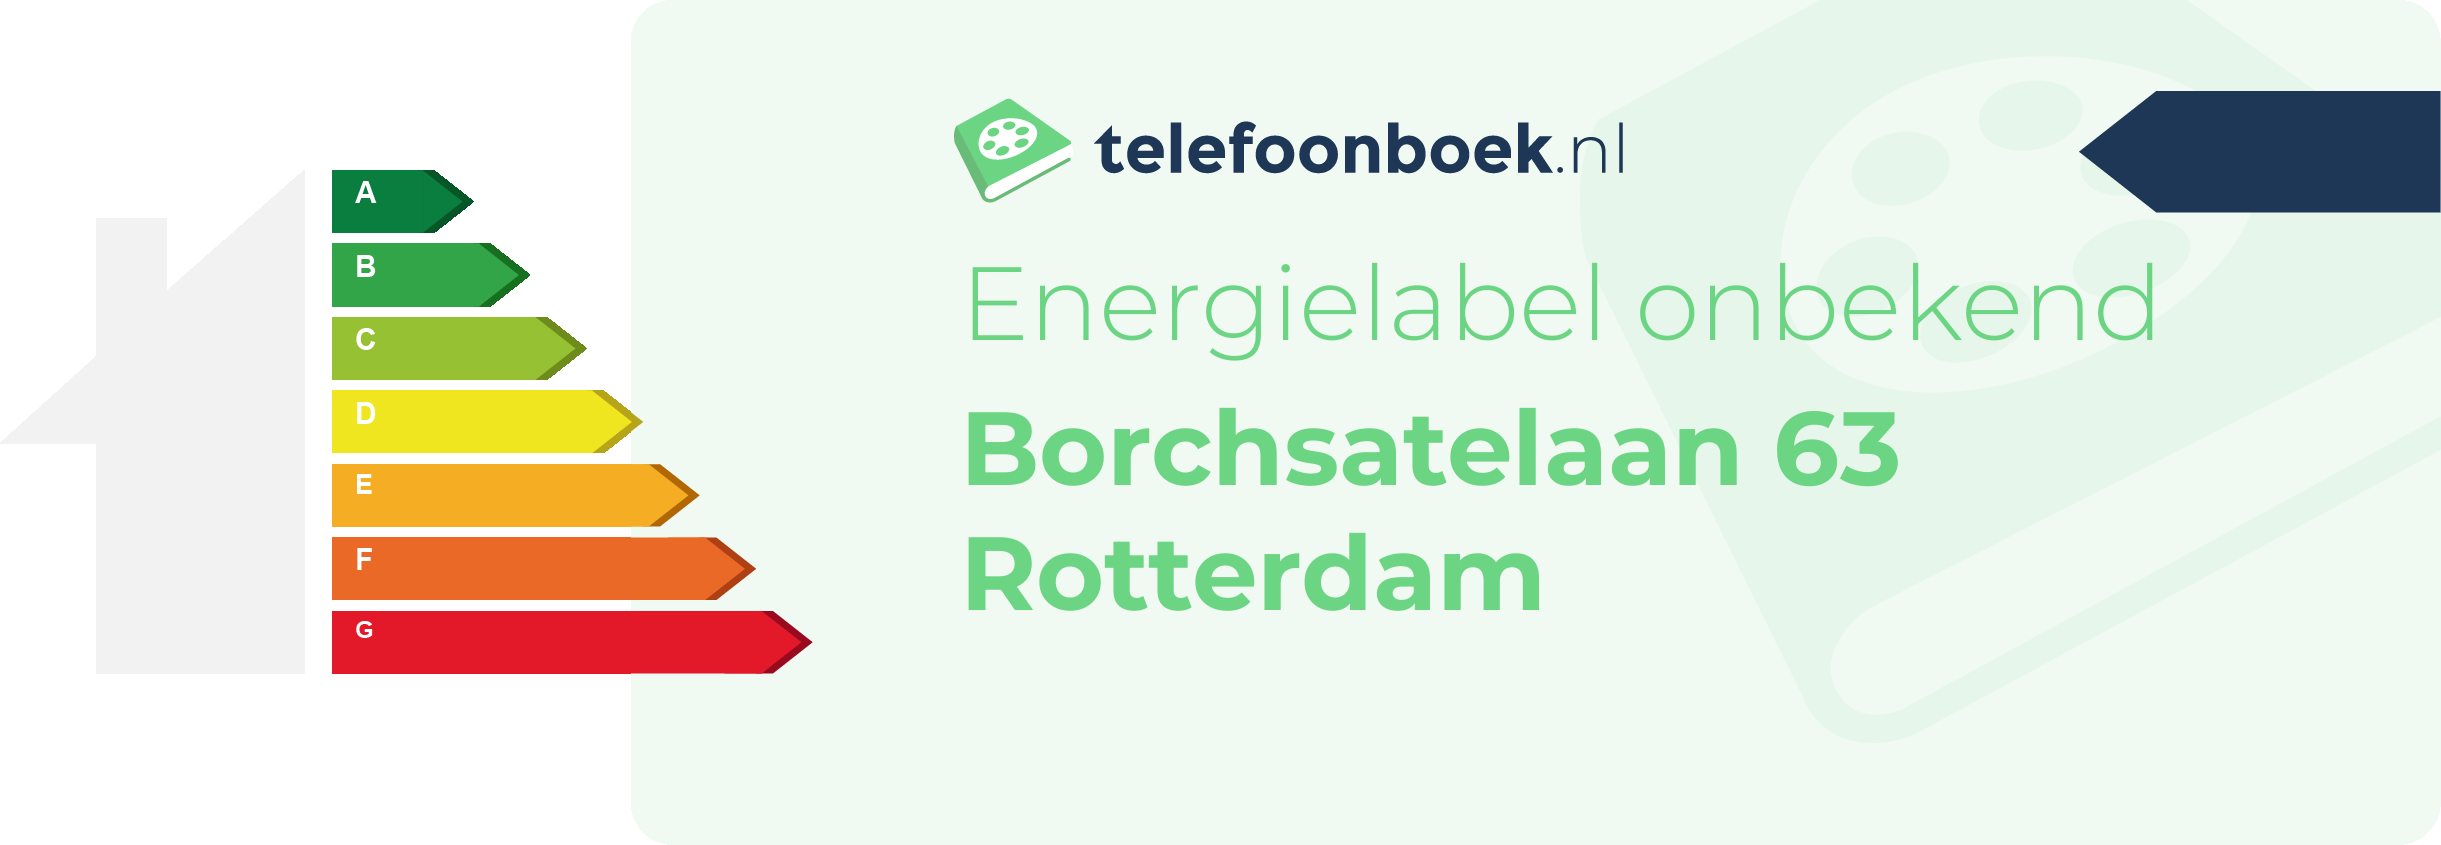 Energielabel Borchsatelaan 63 Rotterdam